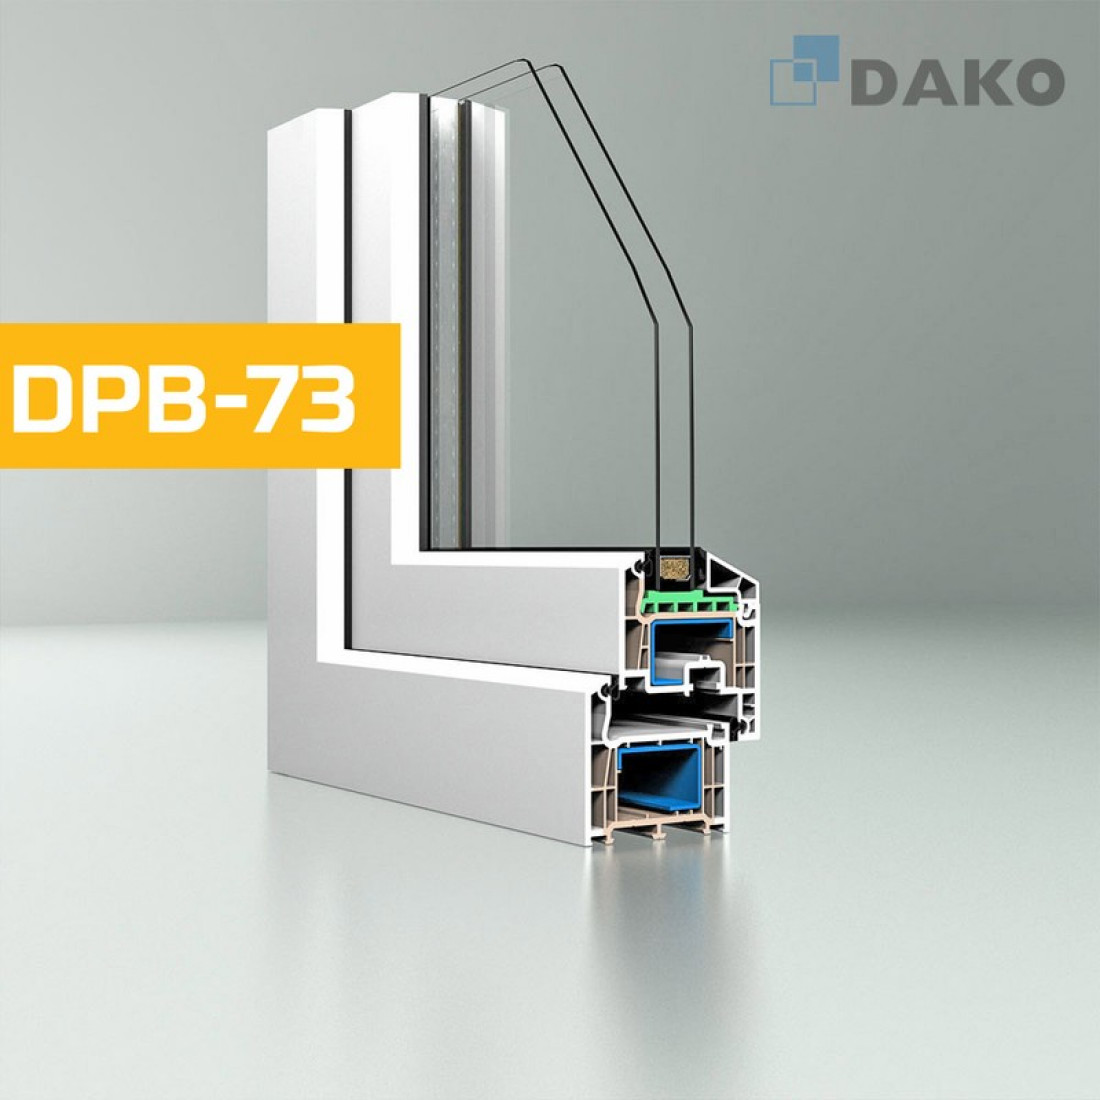 Nowe serie okien DAKO: DPB-73 i DPB- 73+